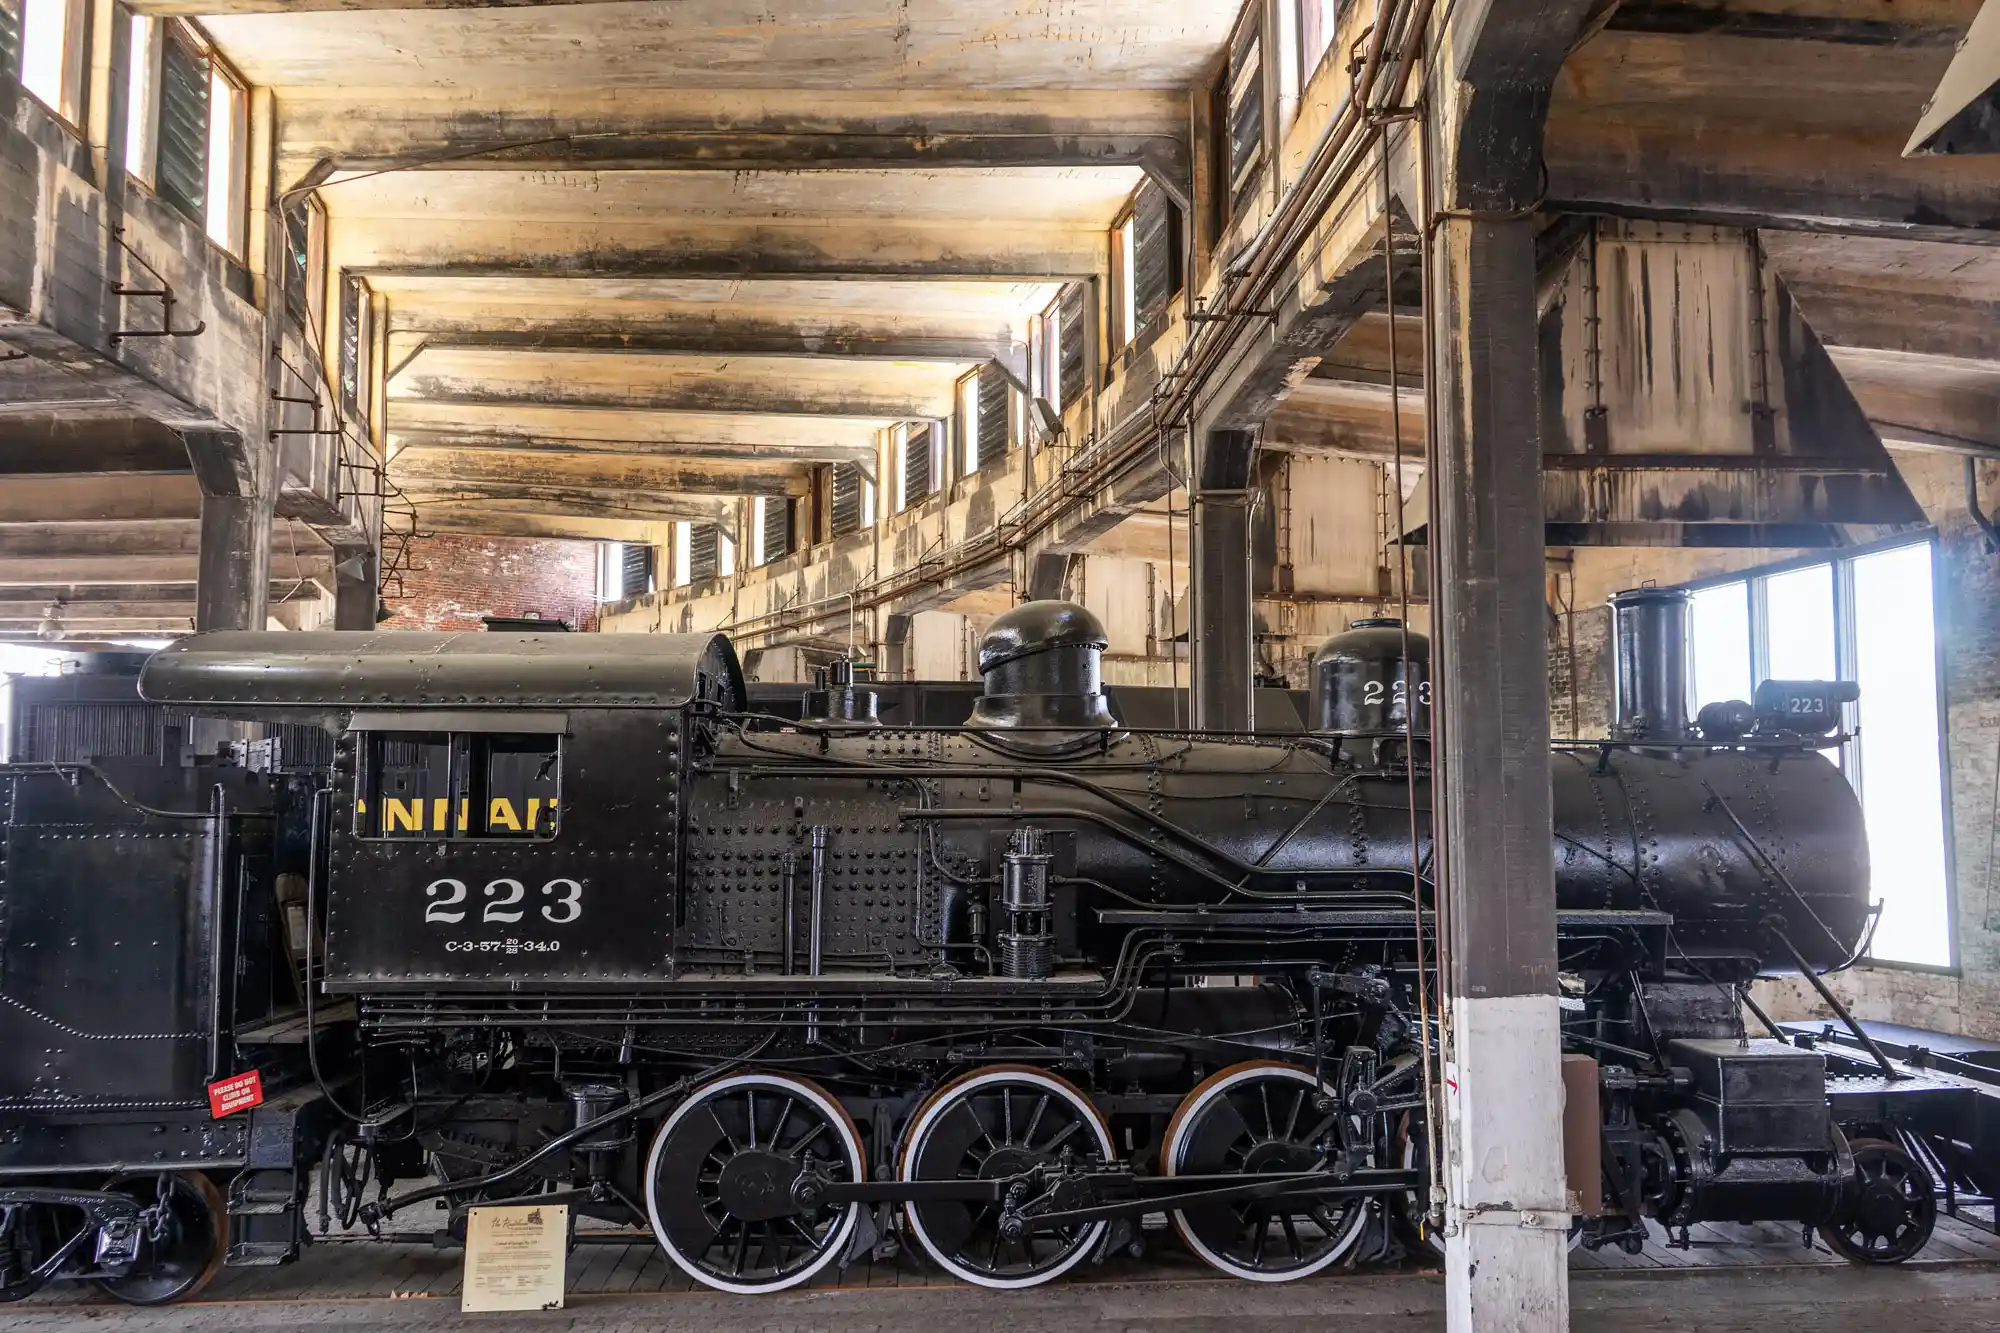 Georgia State Railroad Museum in Savannah